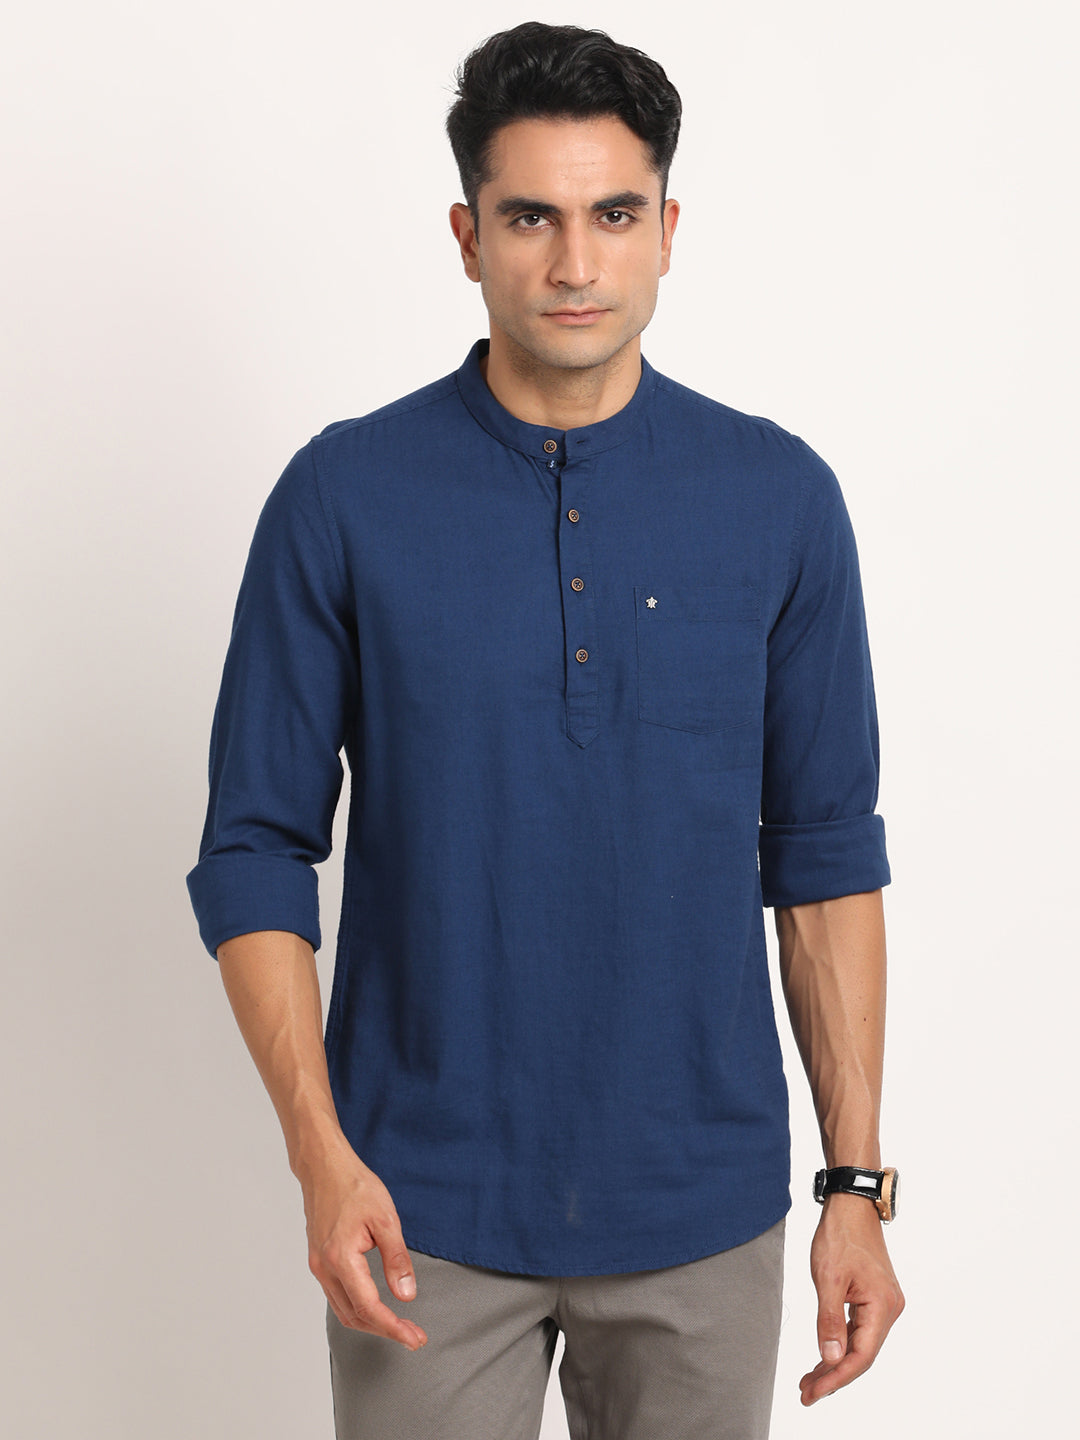 100% Cotton Navy Blue Plain Slim Fit Full Sleeve Casual Shirt